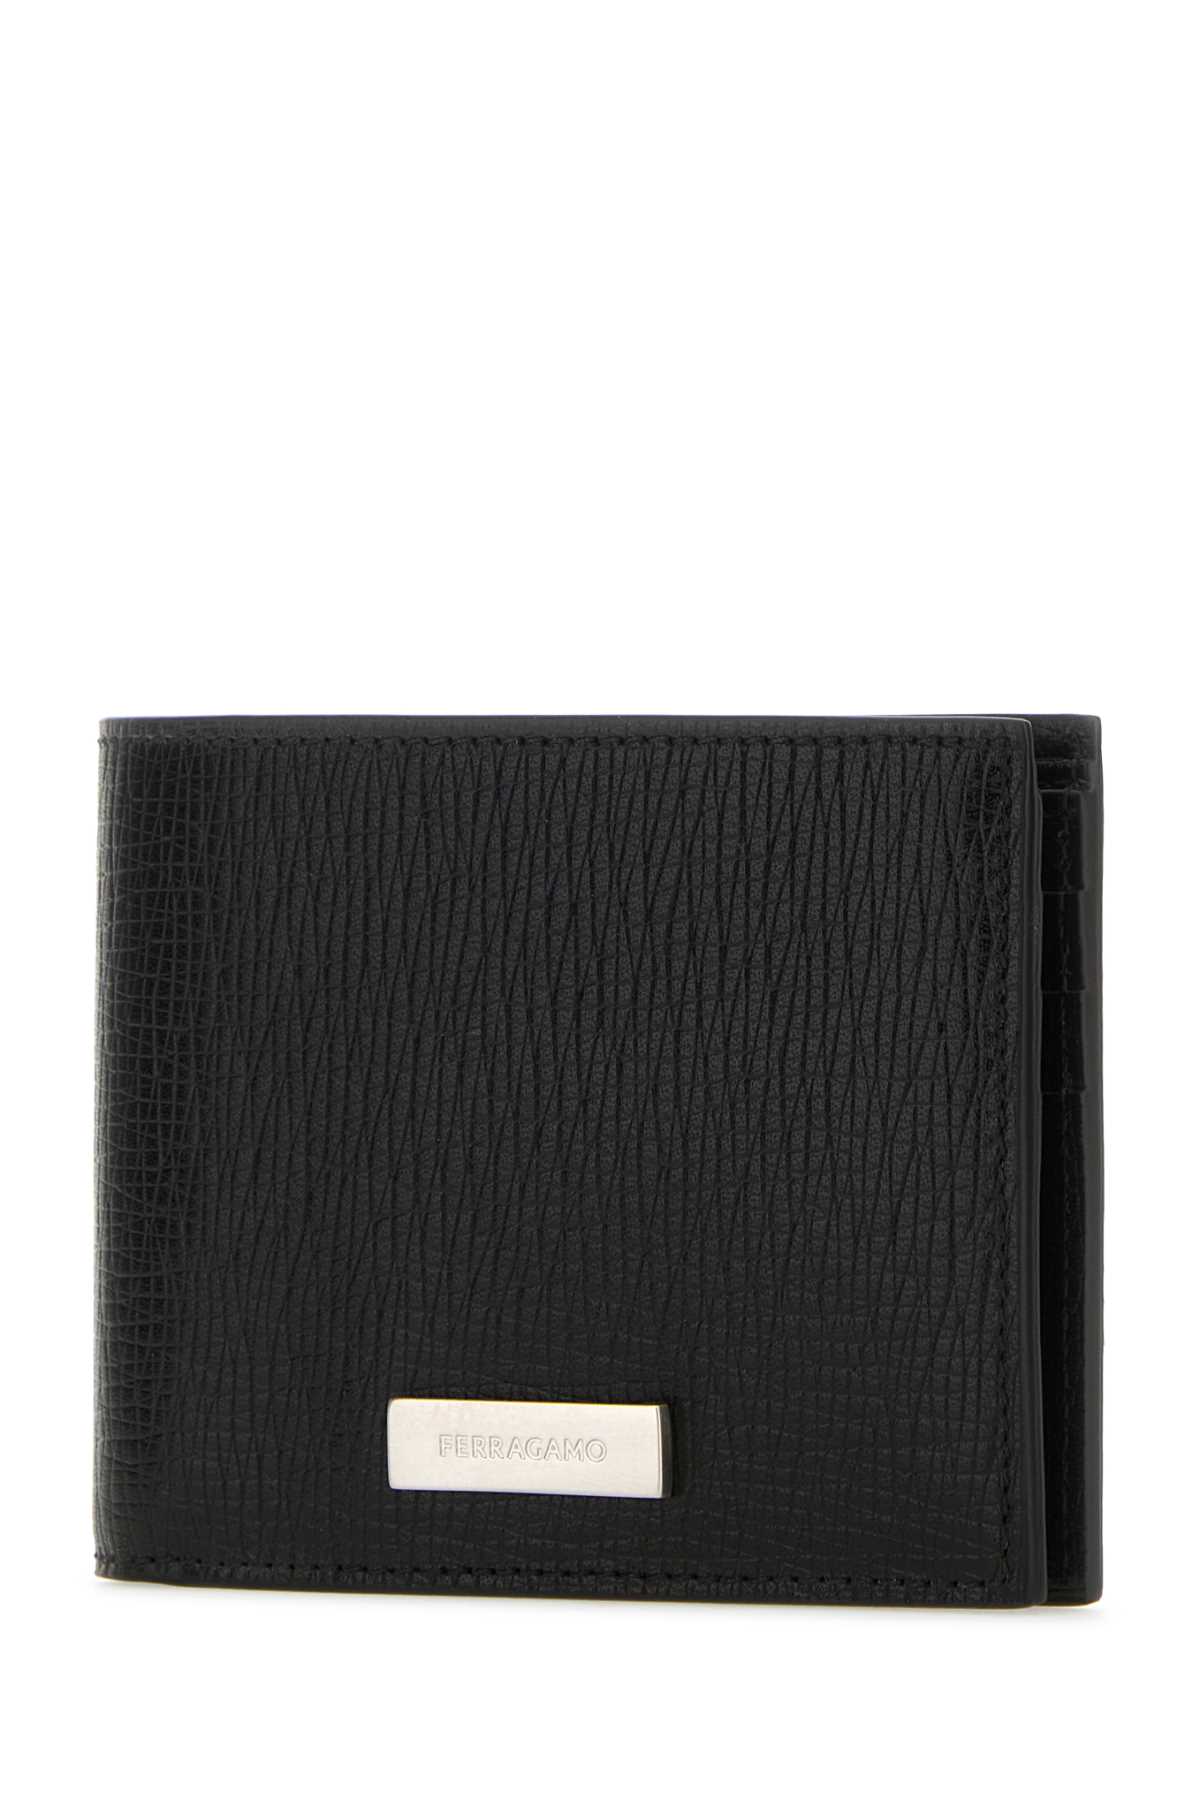 Ferragamo Black Leather Wallet In Neronero